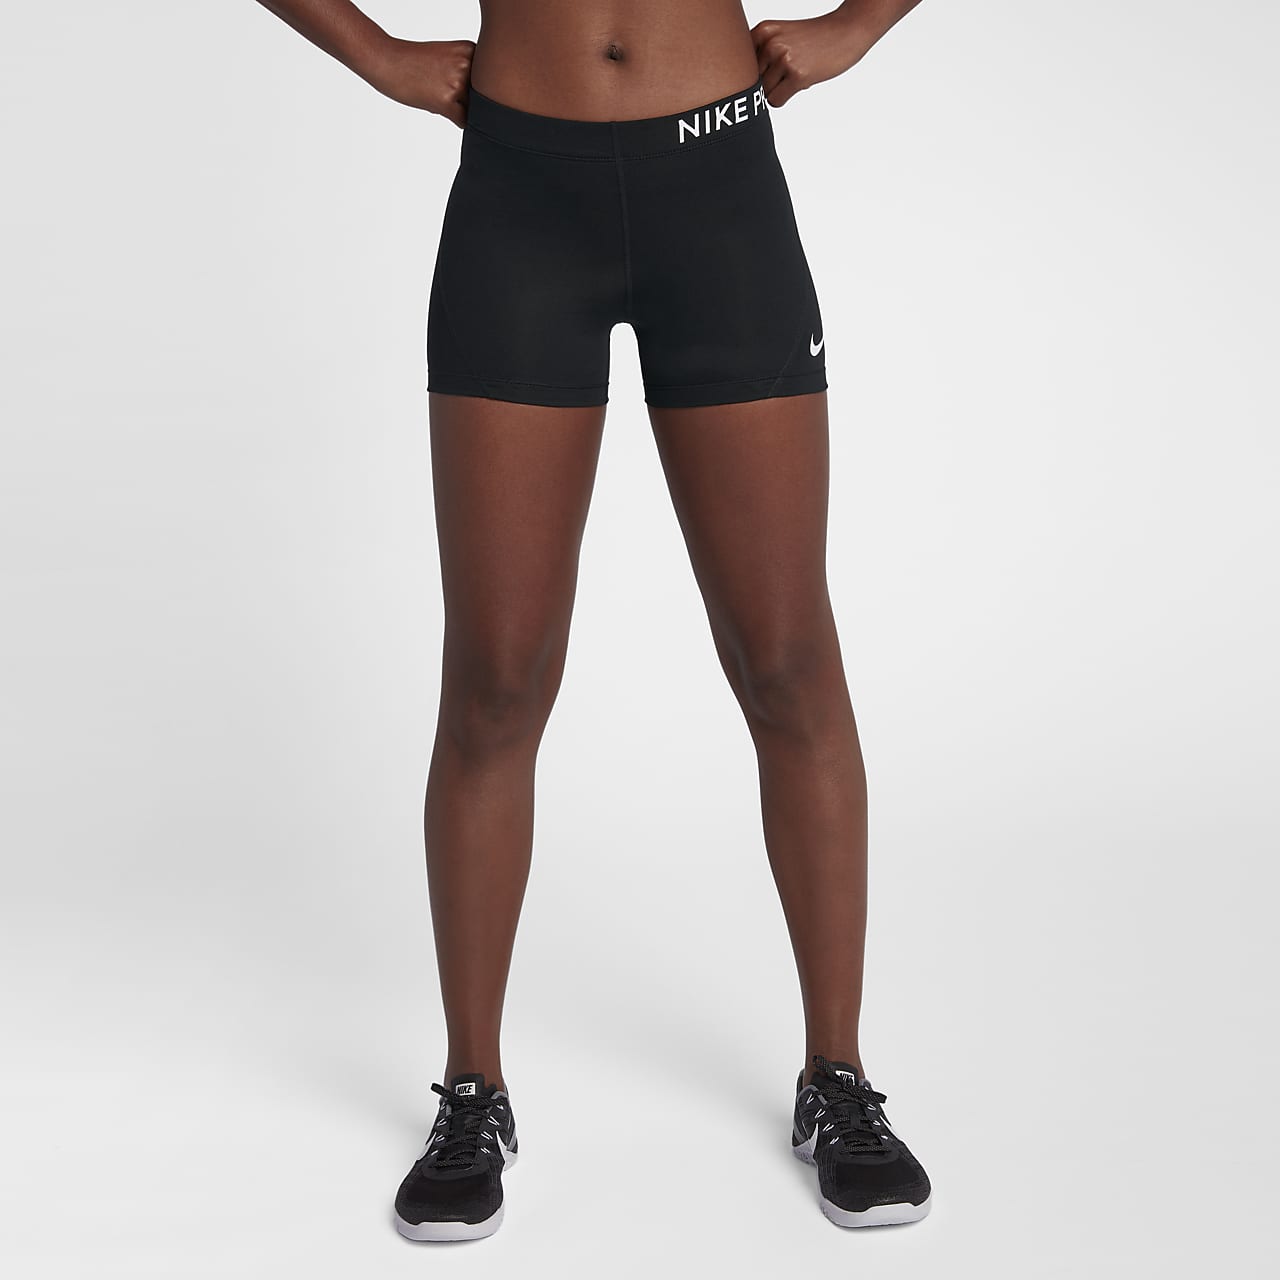 7.5cm approx.) Training Shorts. Nike ID